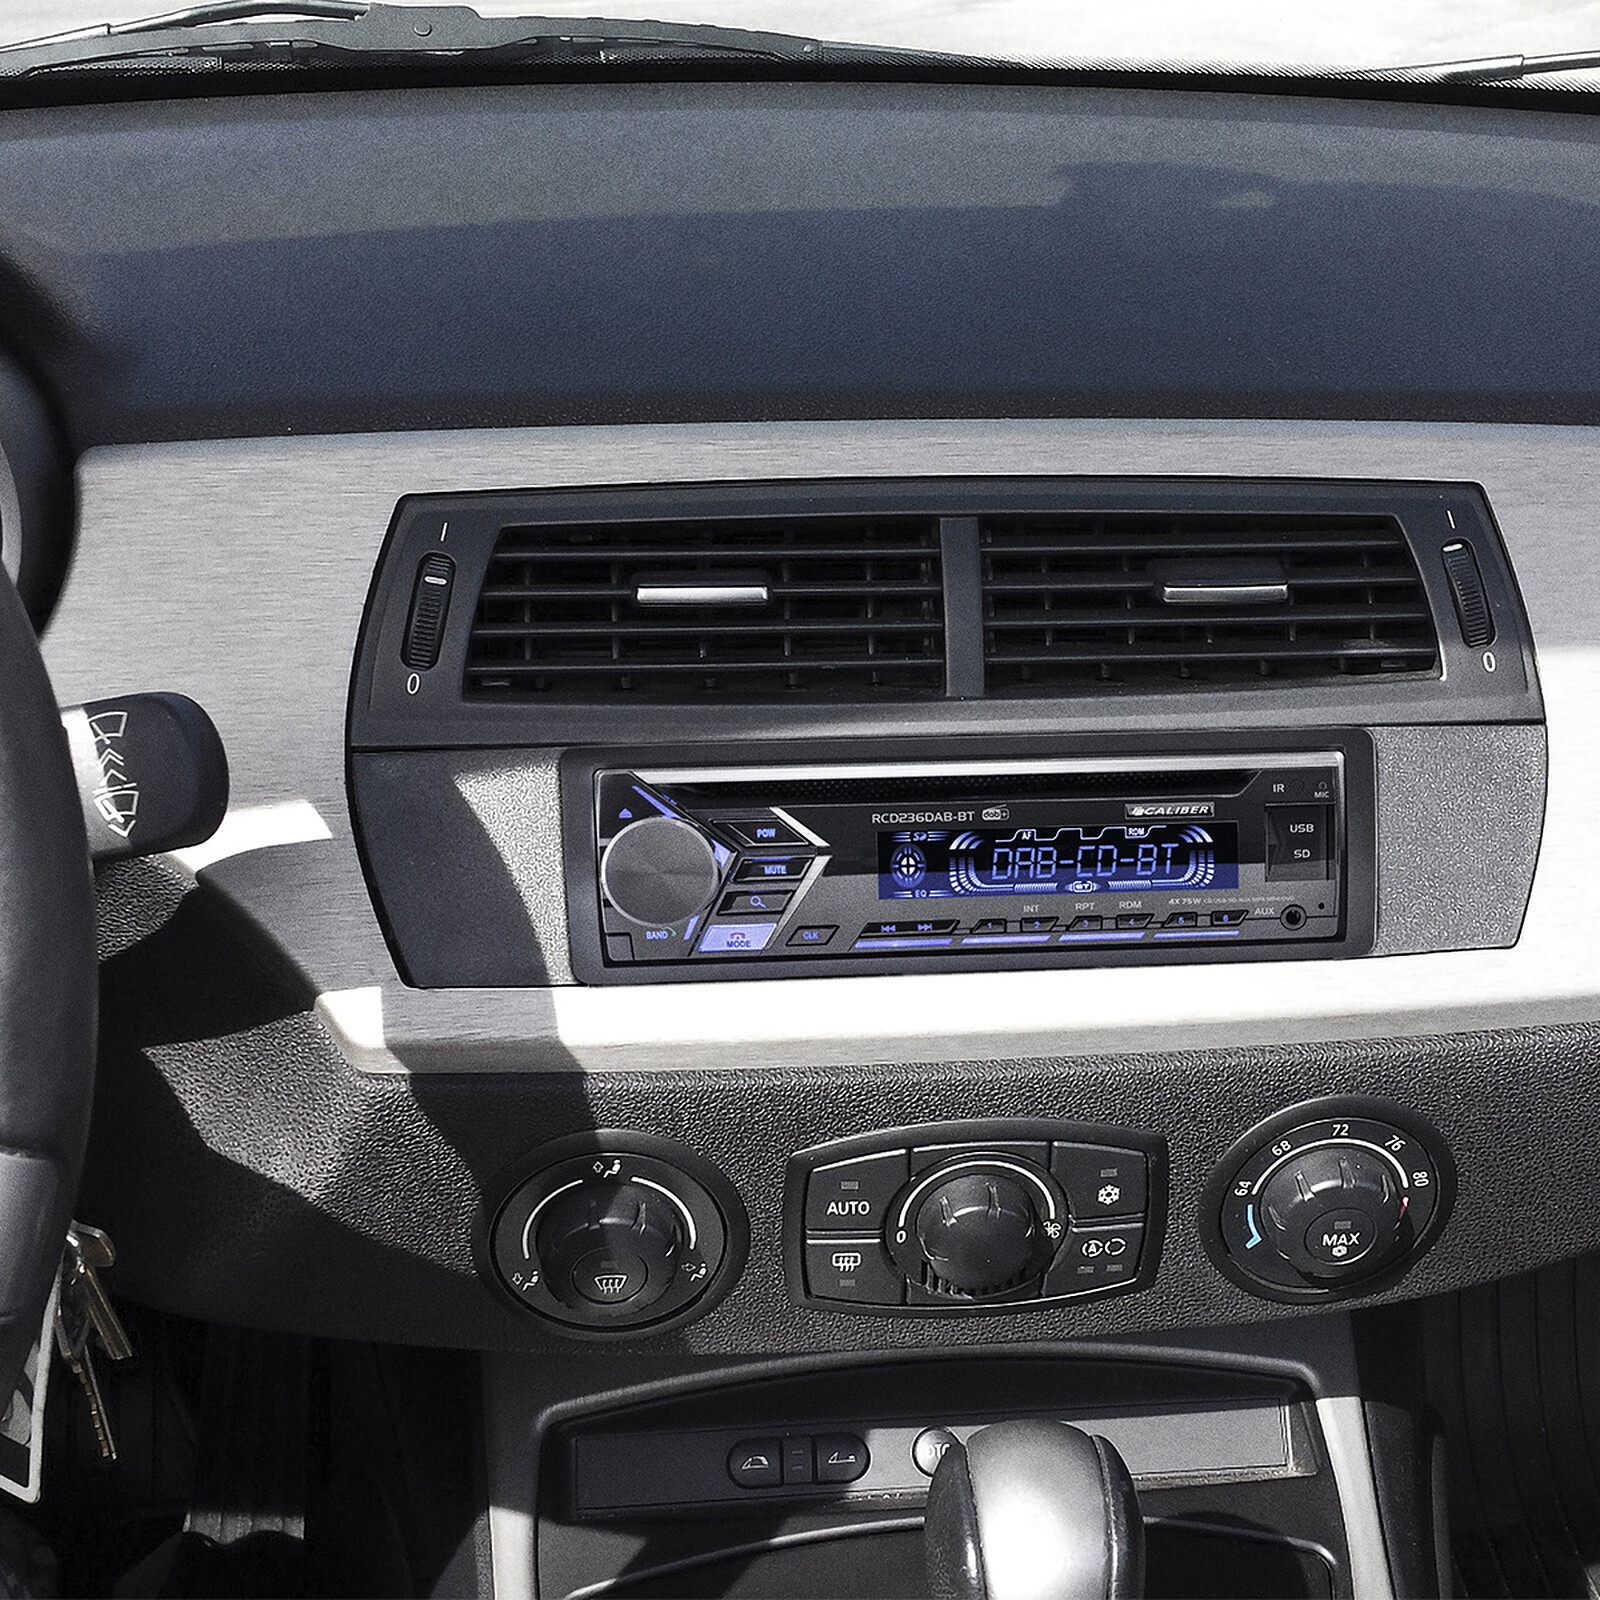 Caliber RCD239DAB-BT - Car stereo - LDLC 3-year warranty